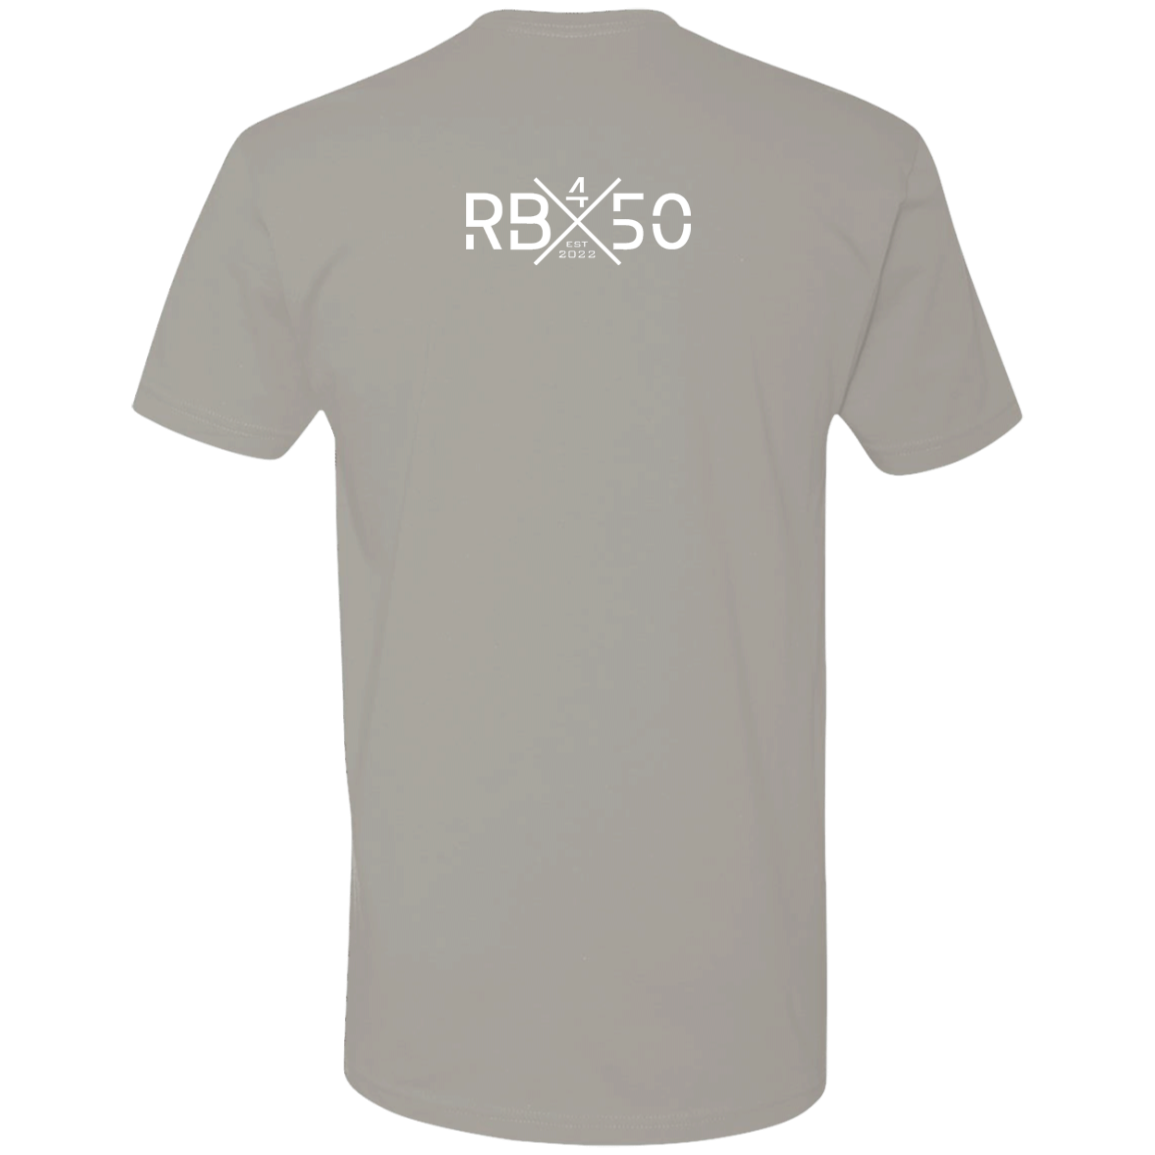 RB450 Mentor Short Sleeve Tee